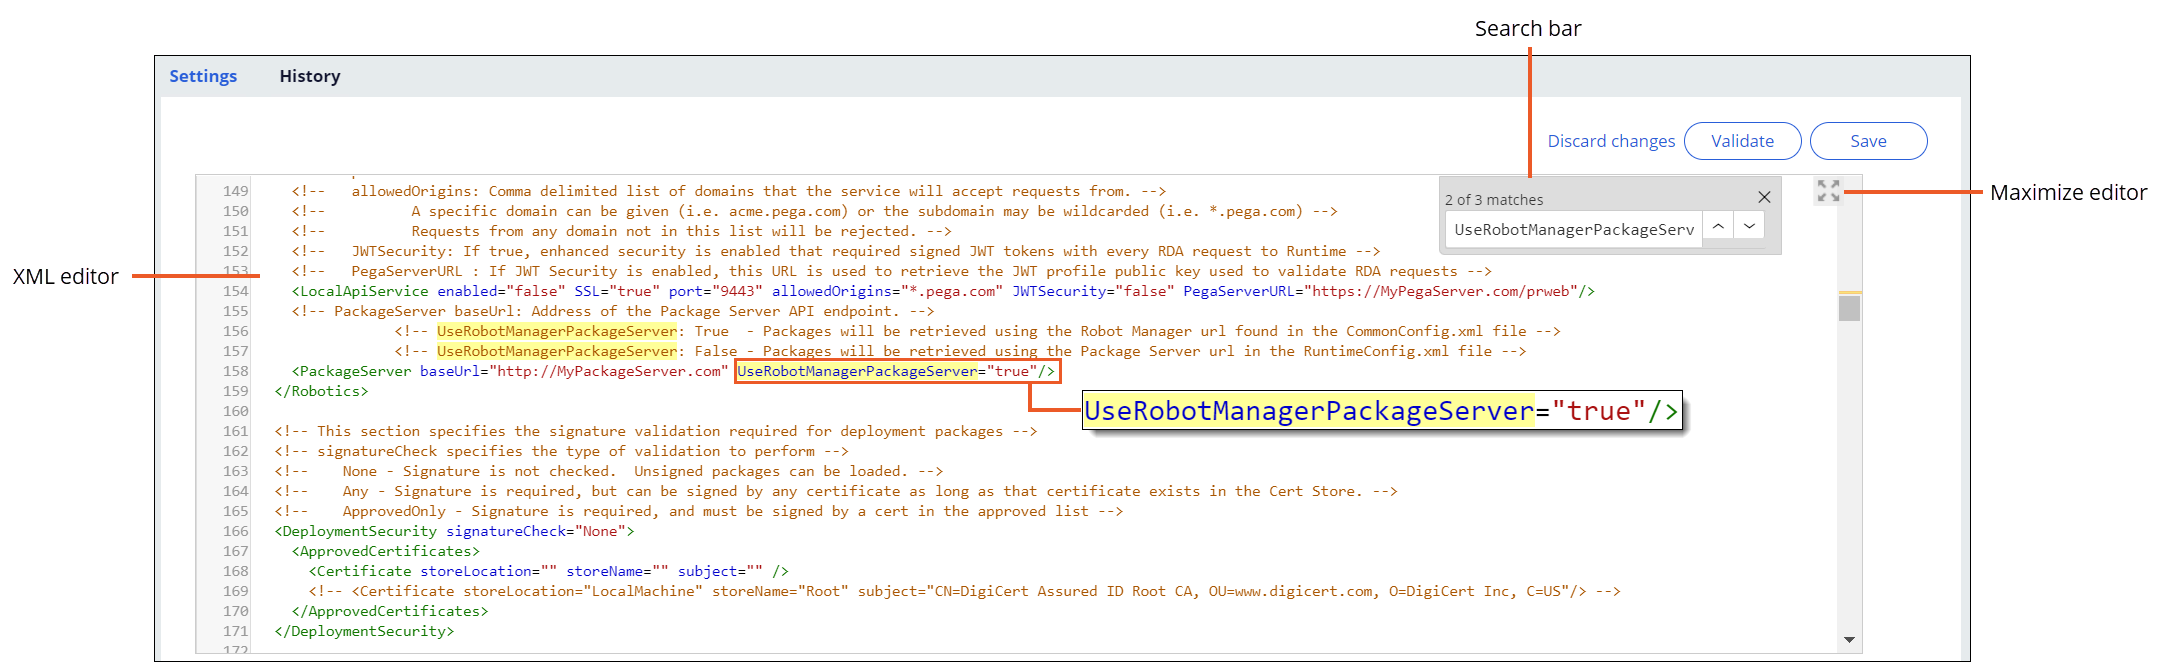 Use the XML-aware editor to modify Pega Robot Runtime settings, as
                                needed.